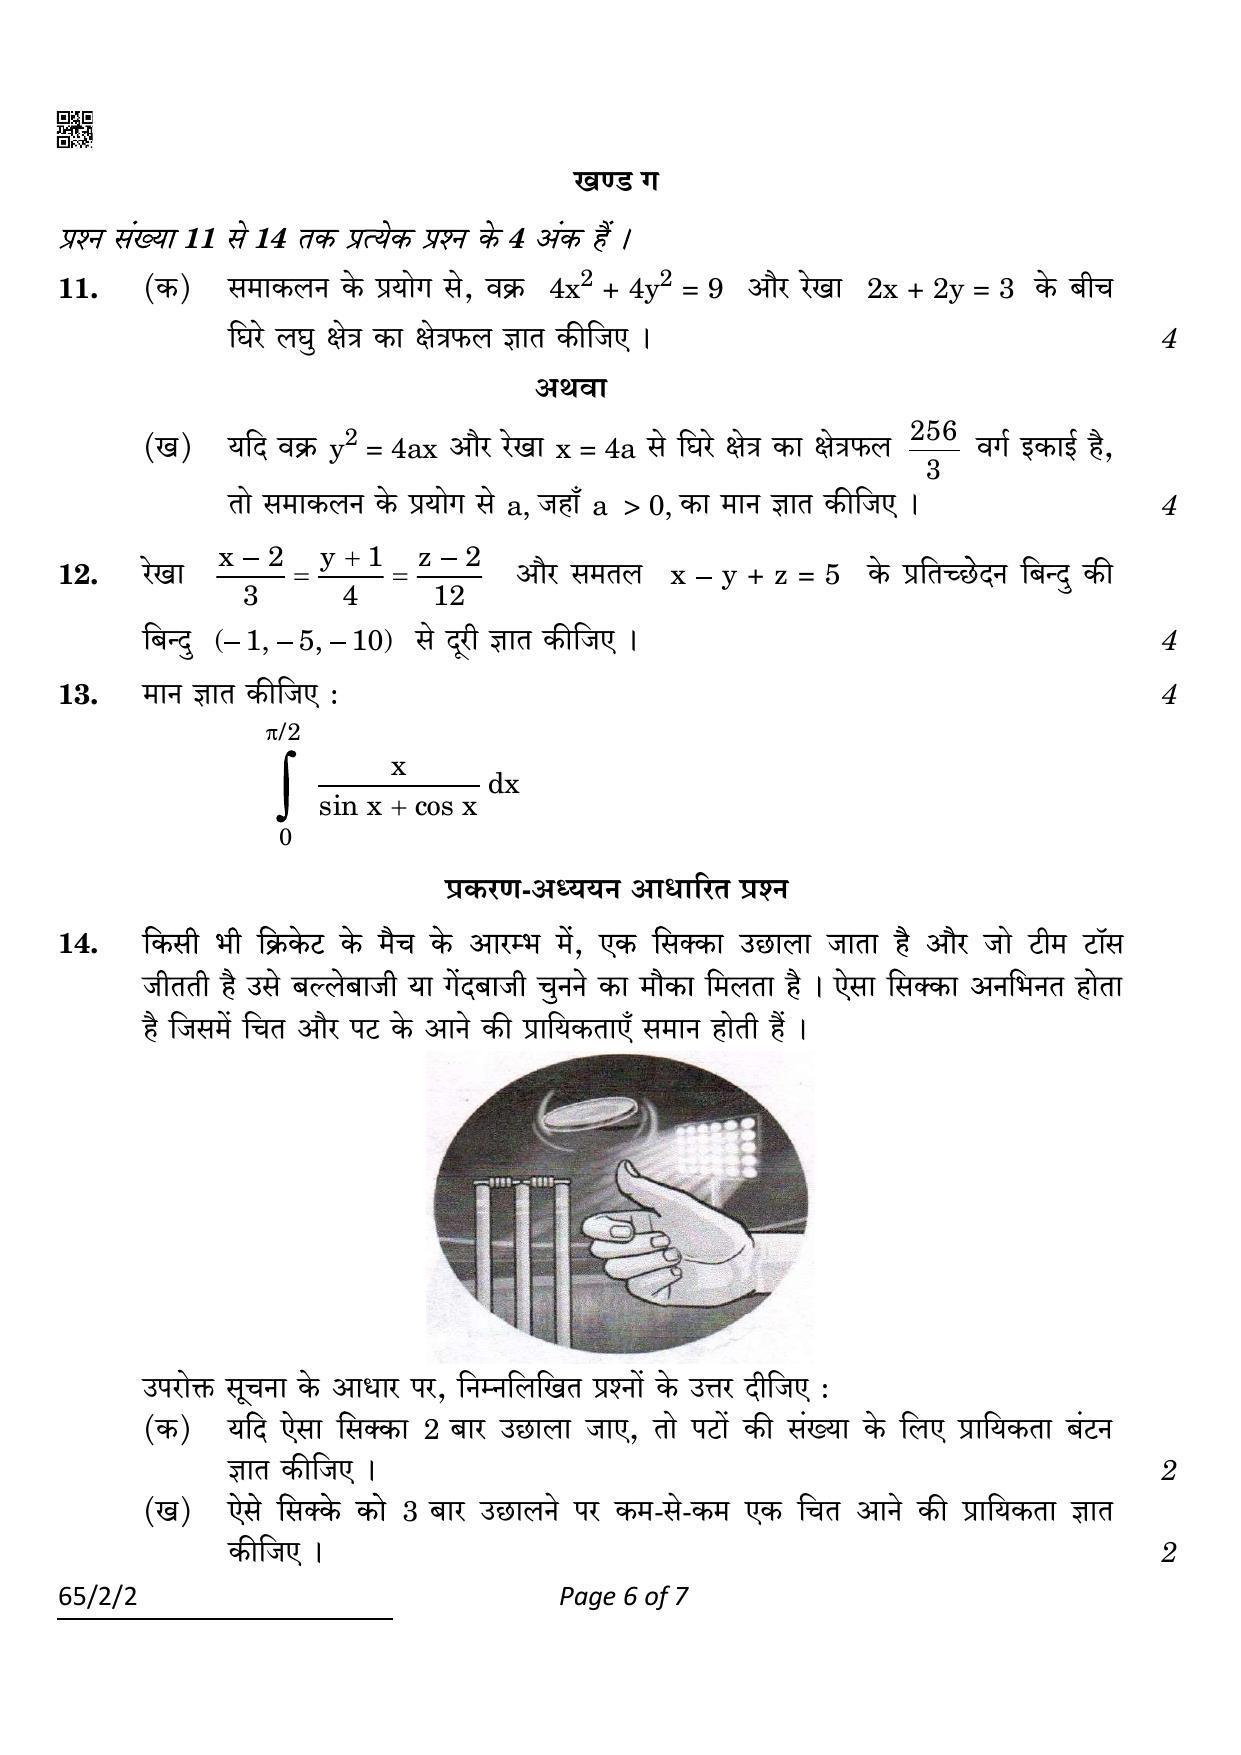 CBSE Class 12 65-2-2 Mathematics 2022 Question Paper - Page 6